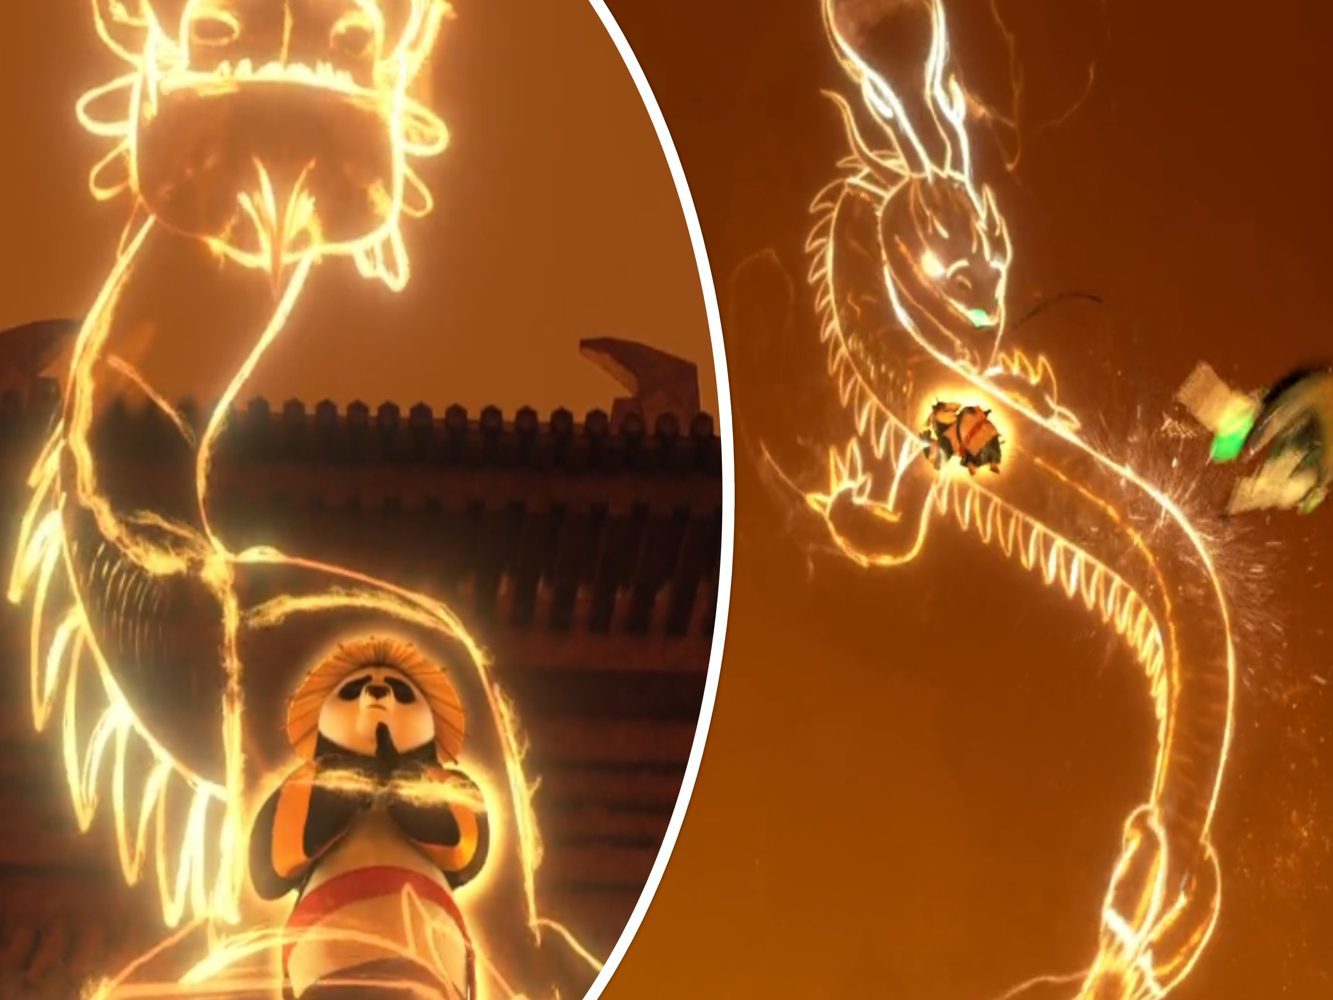 Po manifesting a giant Ki-based Dragon Avatar